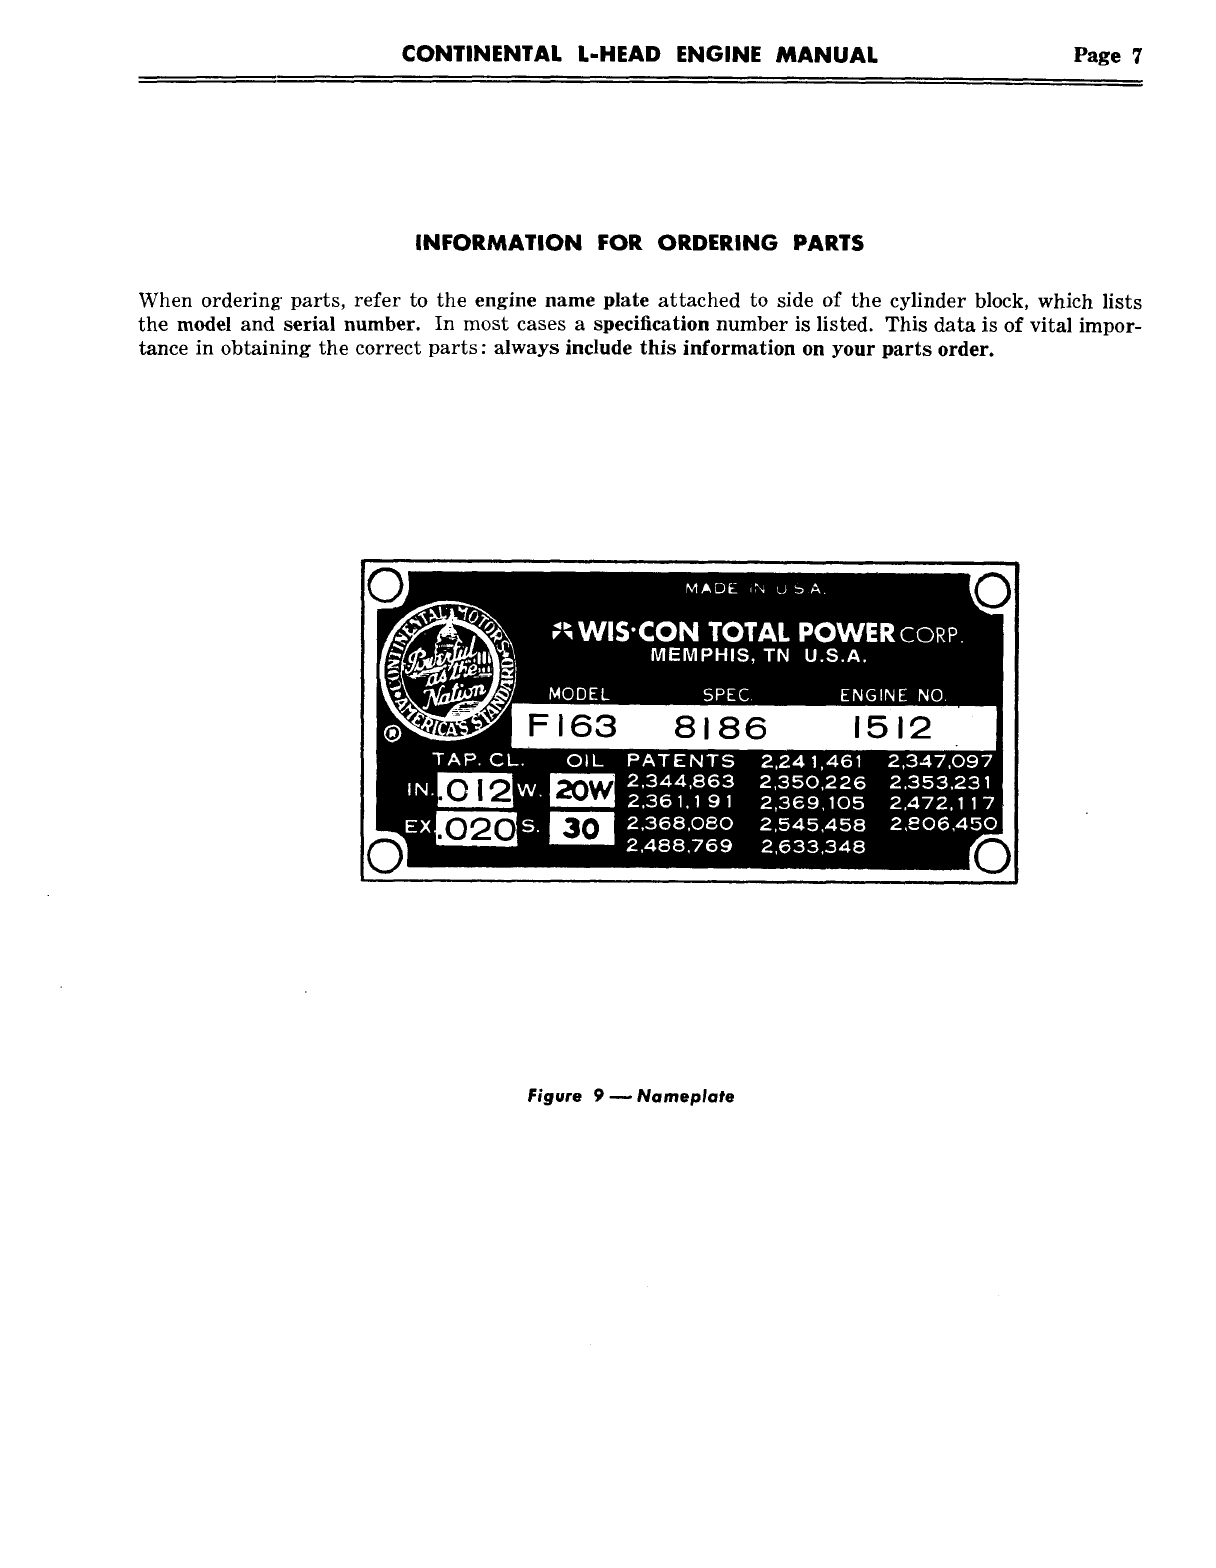 Continental f163 engine manual